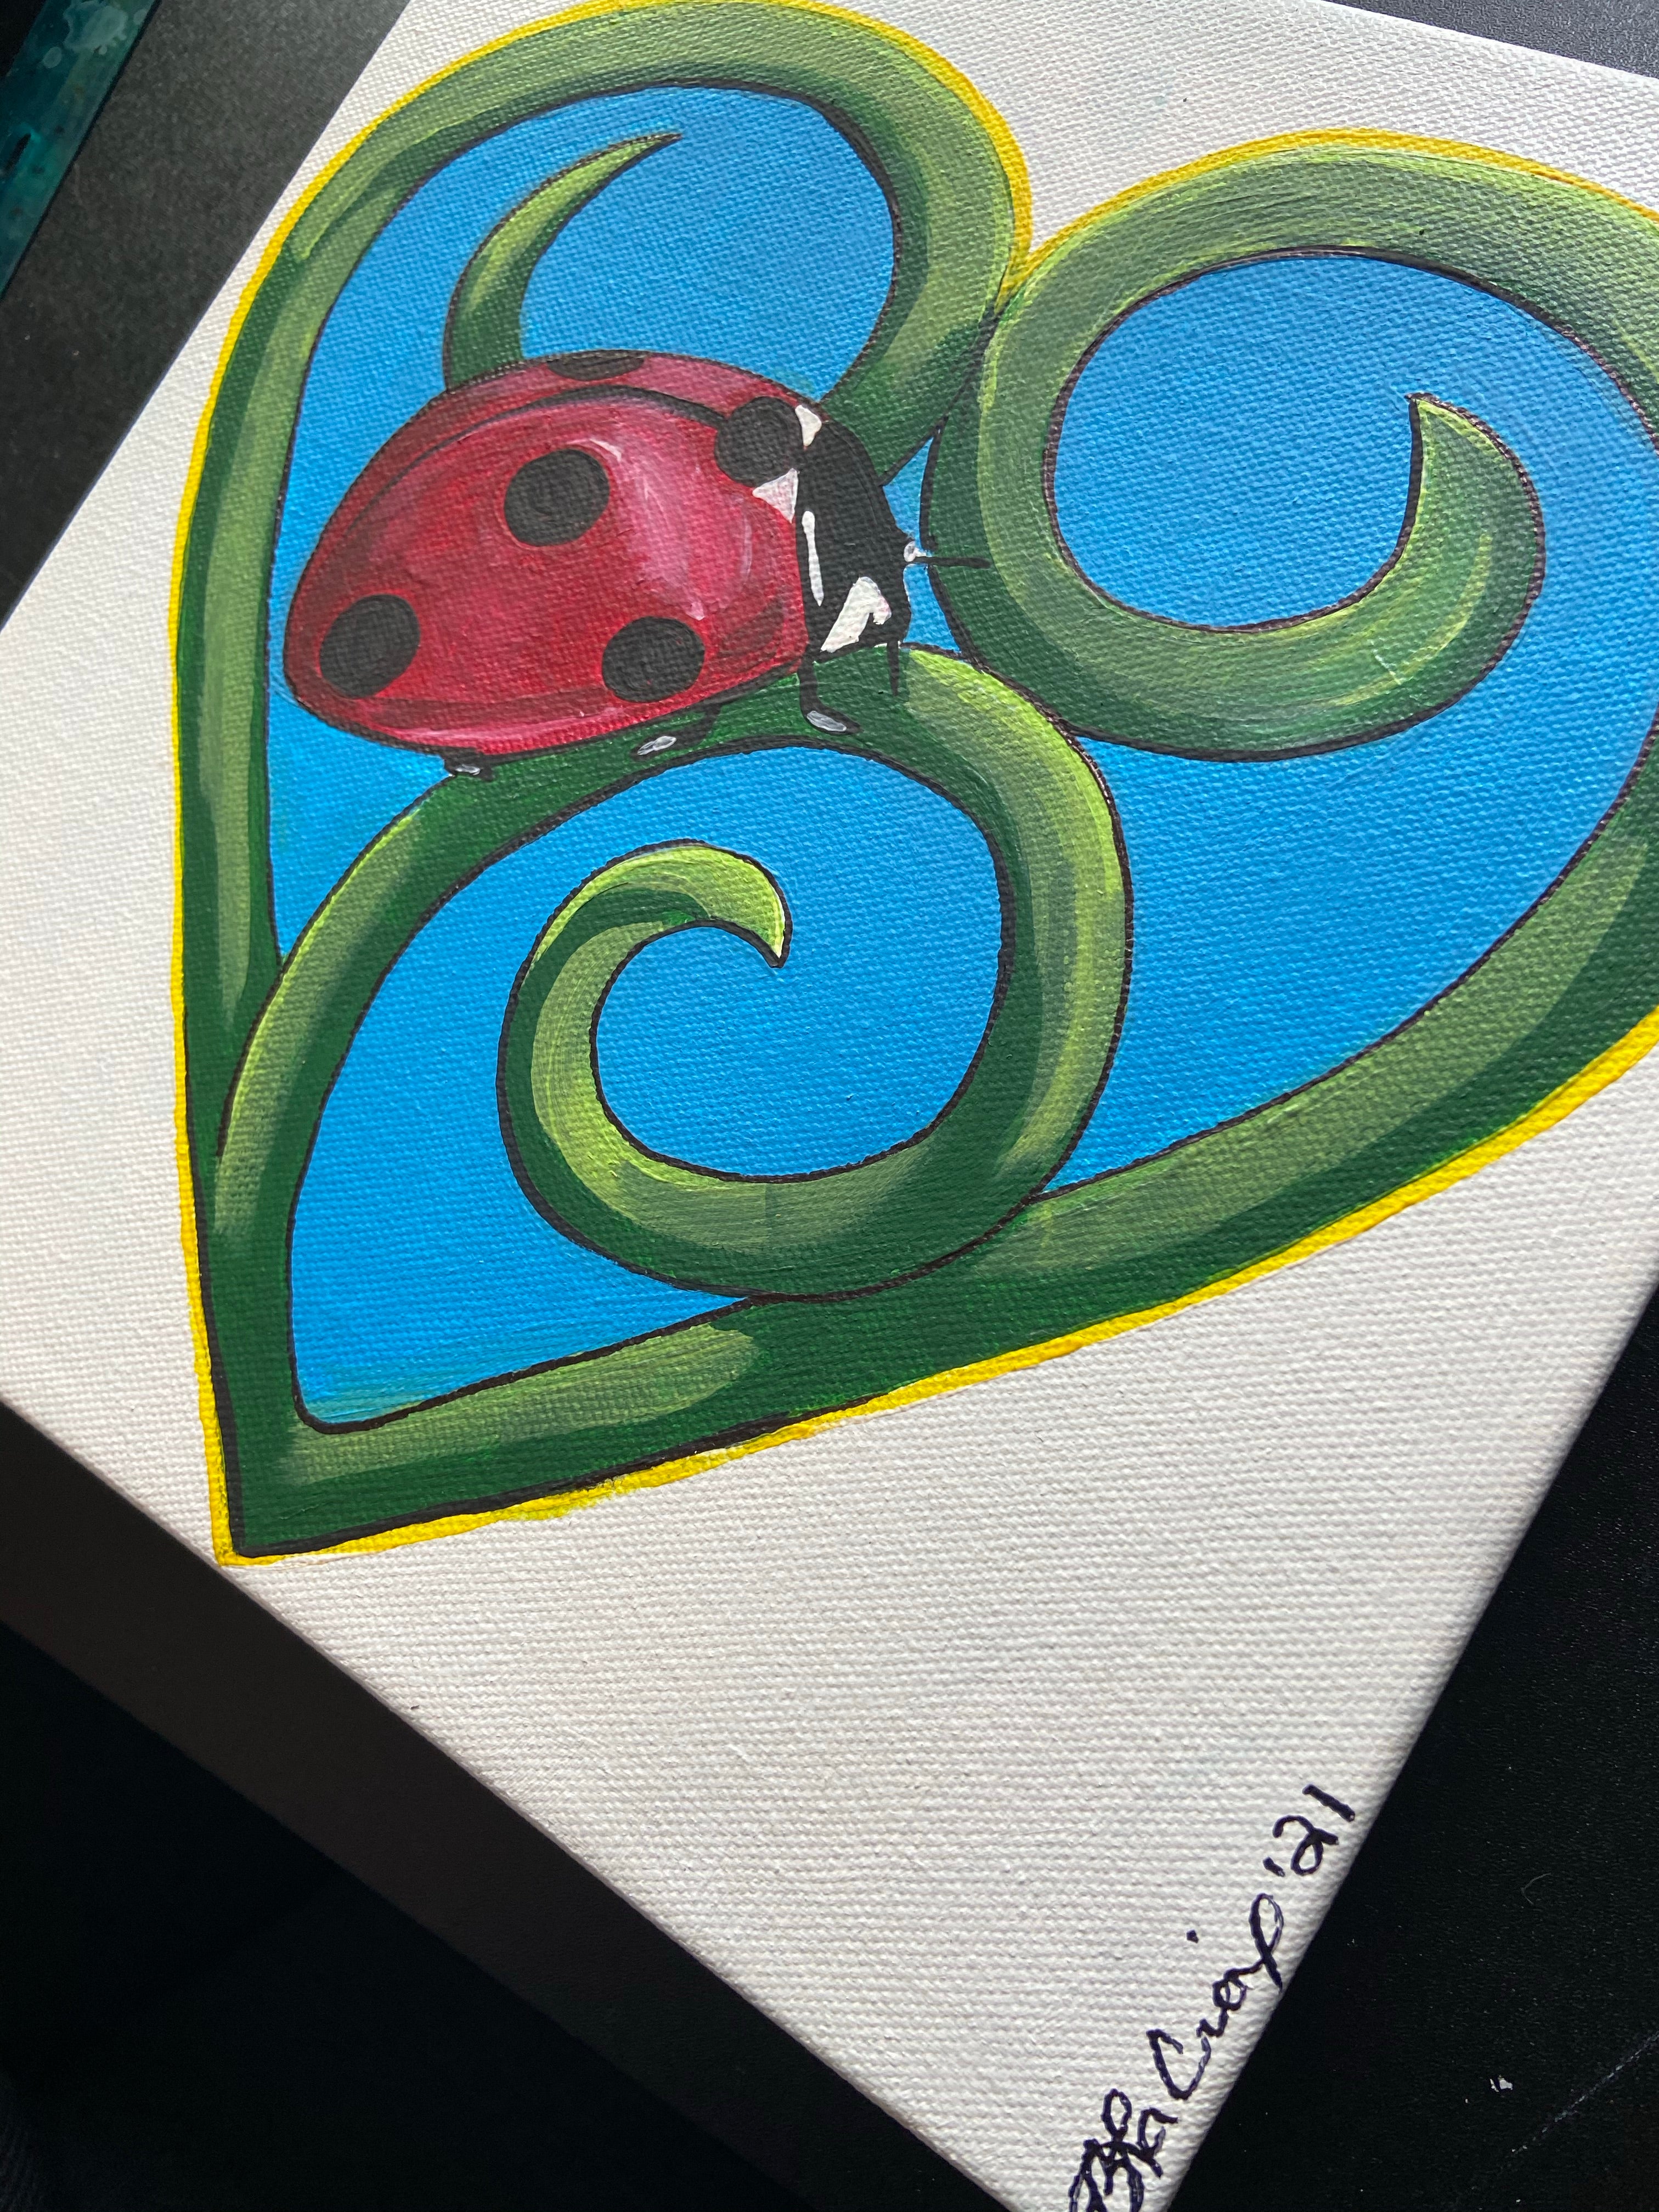 Ladybug Heart acrylic LaCroix Artistry painting